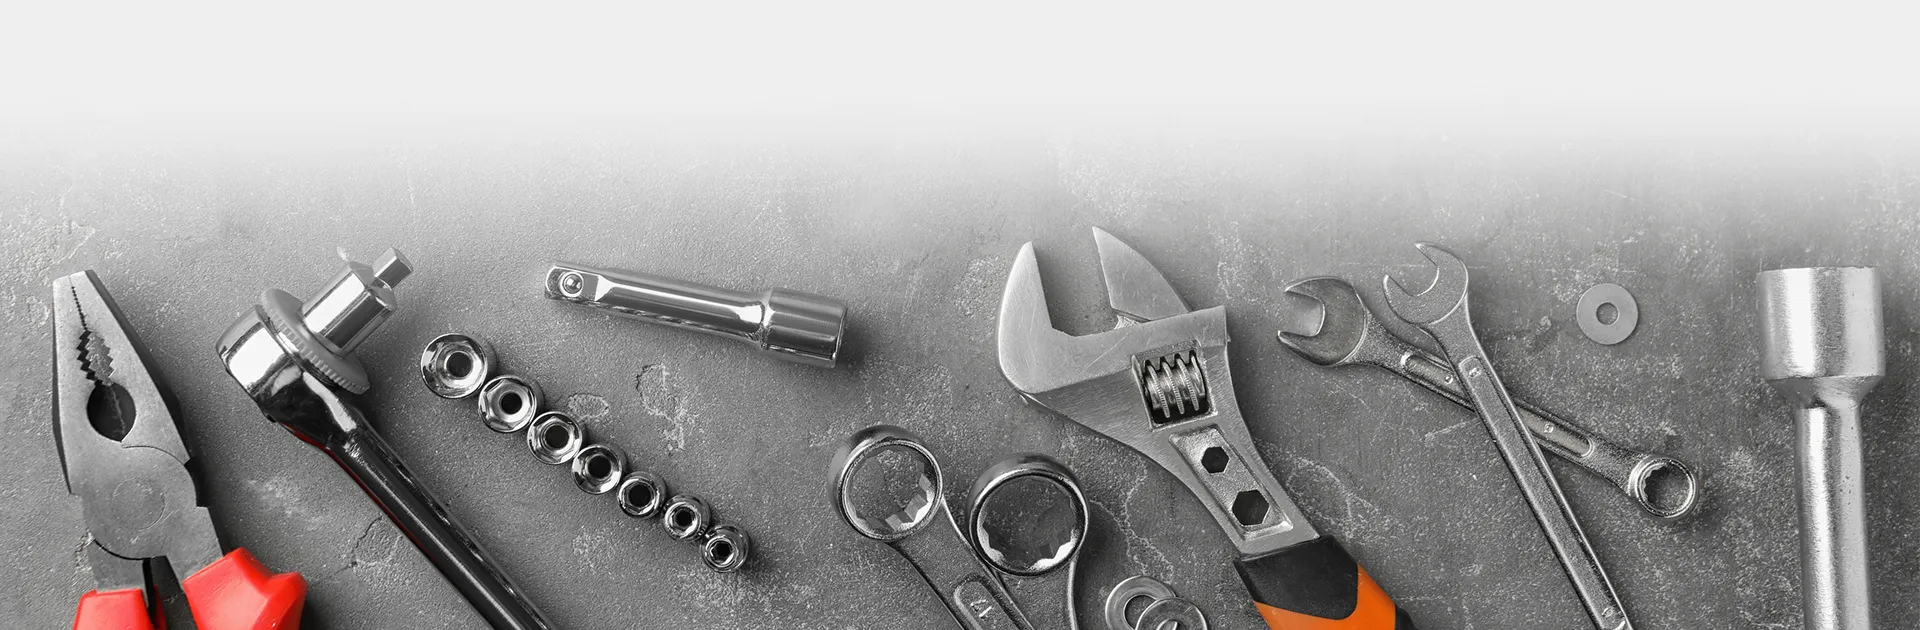 Auto mechanic`s tools on grey stone table.